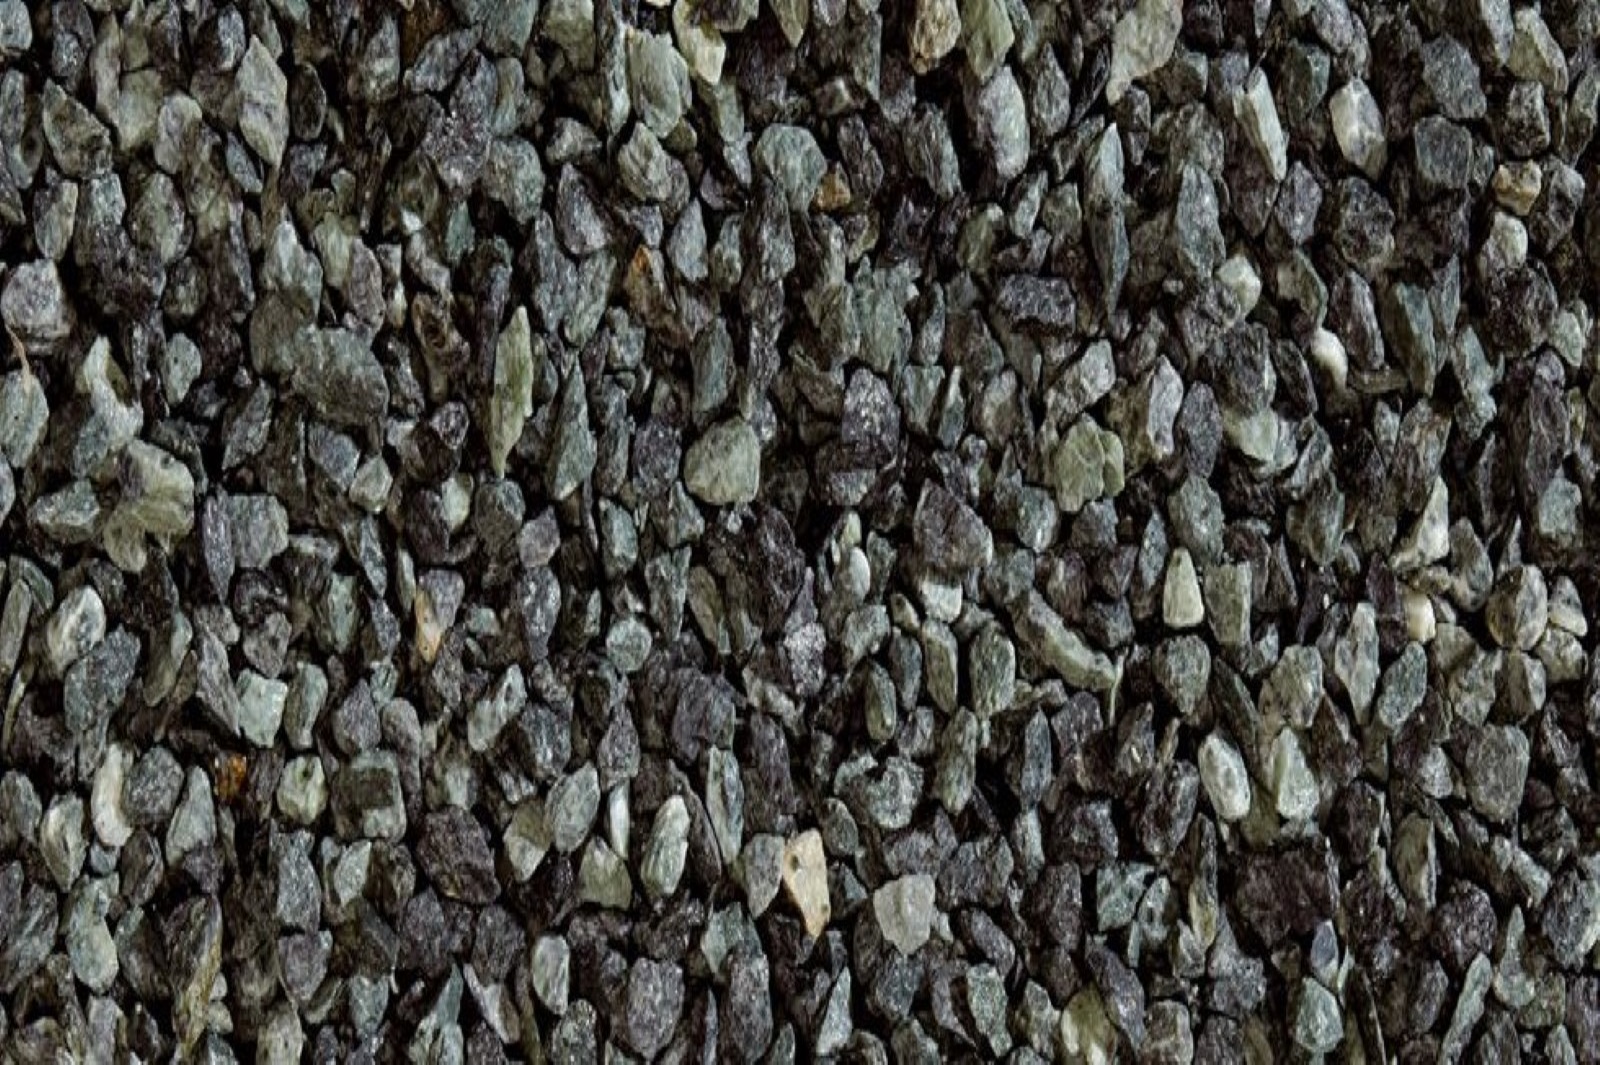 Gartensplitt Ziersplitt Verde Alpi Granulat Marmor grau-grün 40-60 mm 25 kg